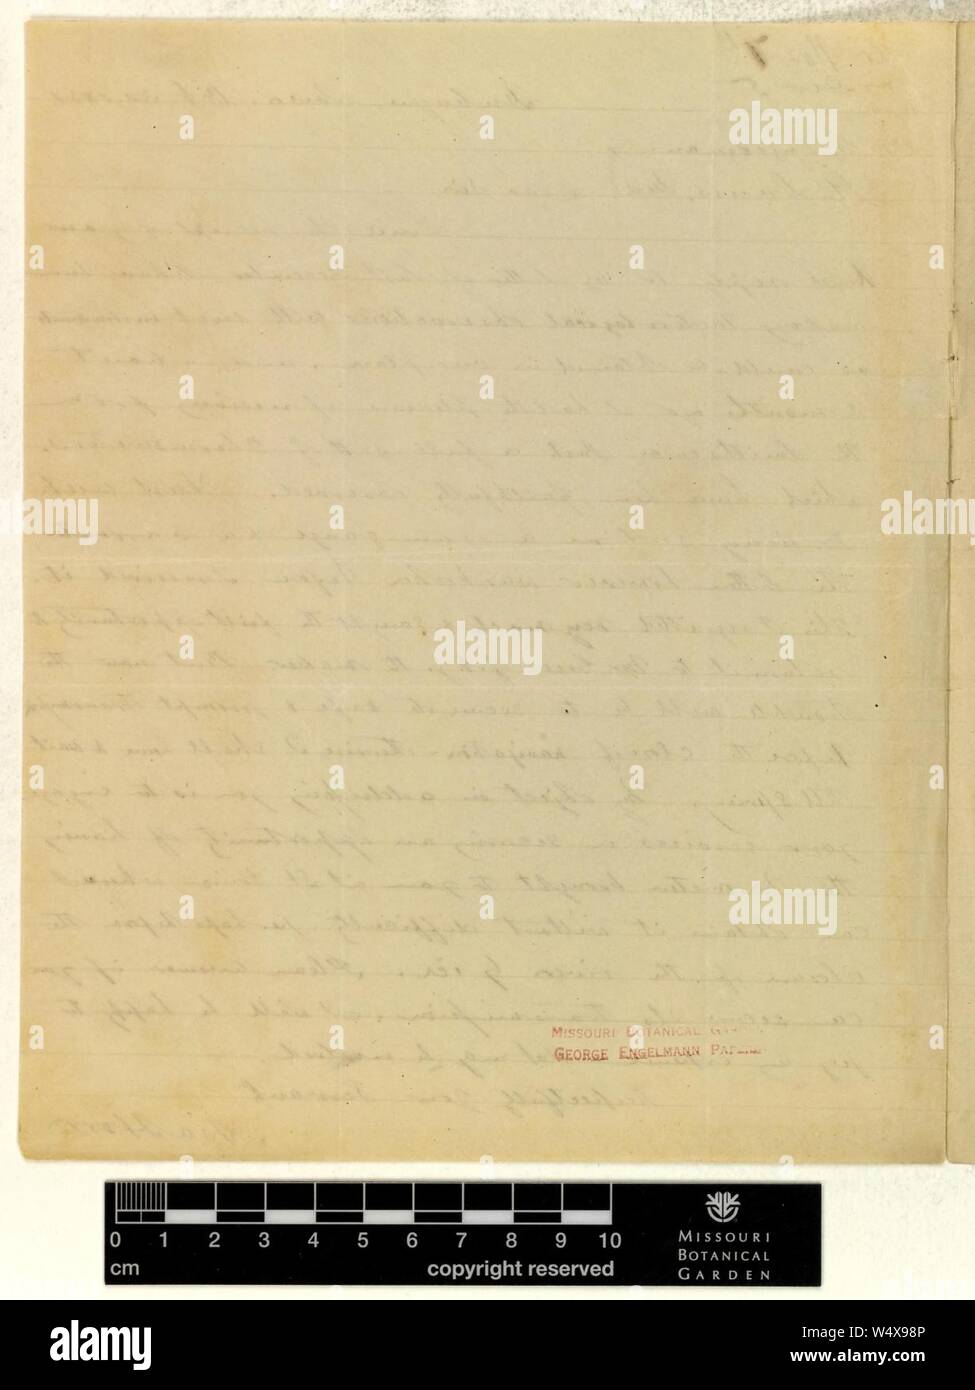 Correspondence - Horr (Asa) and Engelmann (George) (Oct 30, 1851 (1) verso) Stock Photo